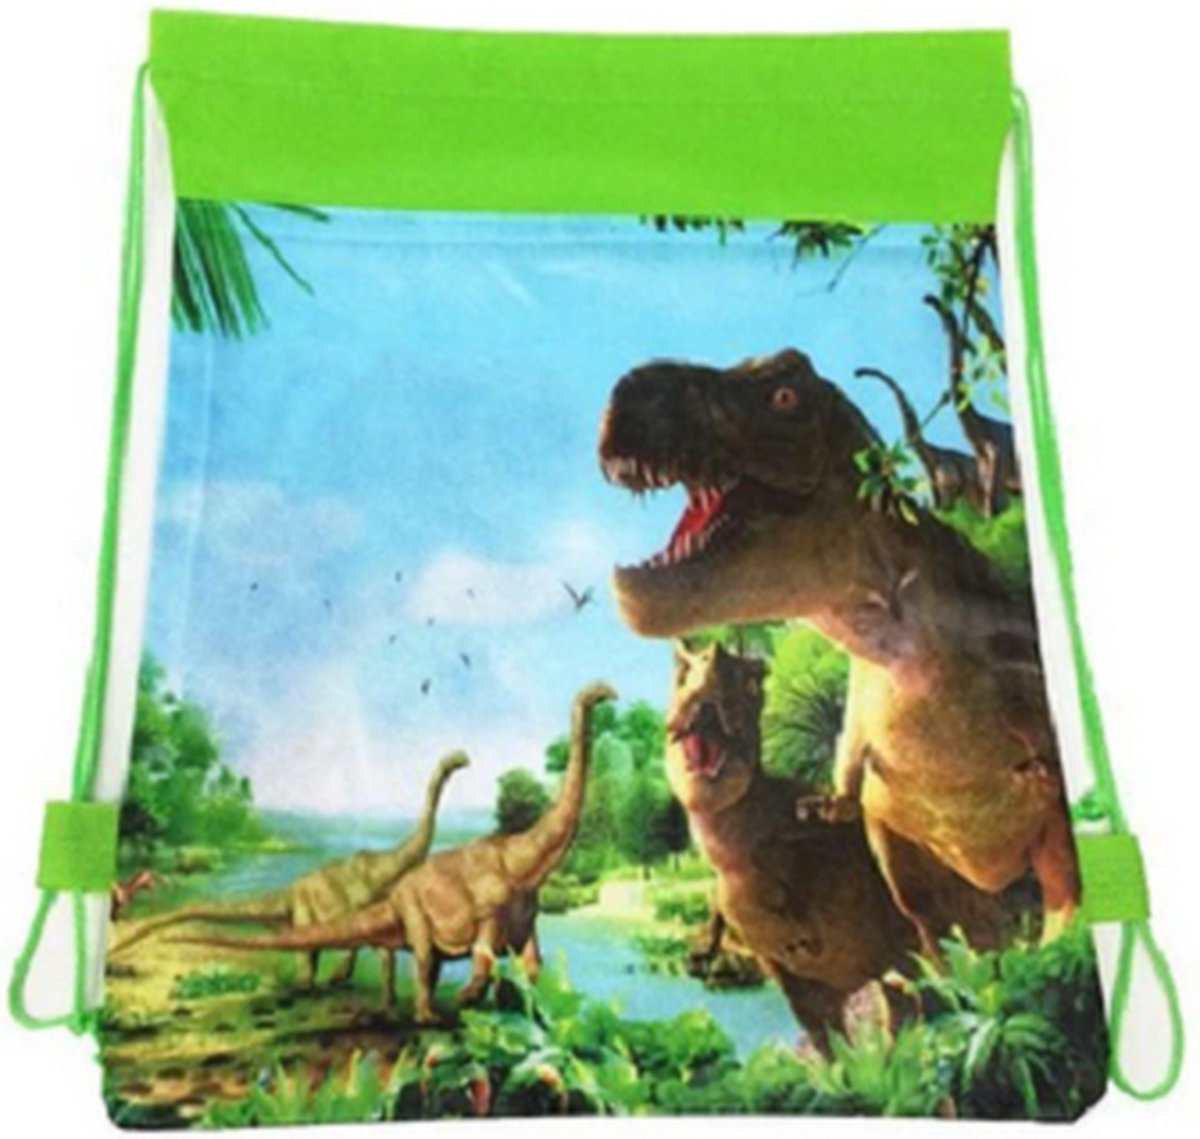 Rugzak Dino - Dinosaurus - Dino - rugtas - Dinosaurus zwemtas - trekkoord - tas - Dinosaurus rugtas - kindertas - Dino bag pack - children's bag pack - 27 x 35